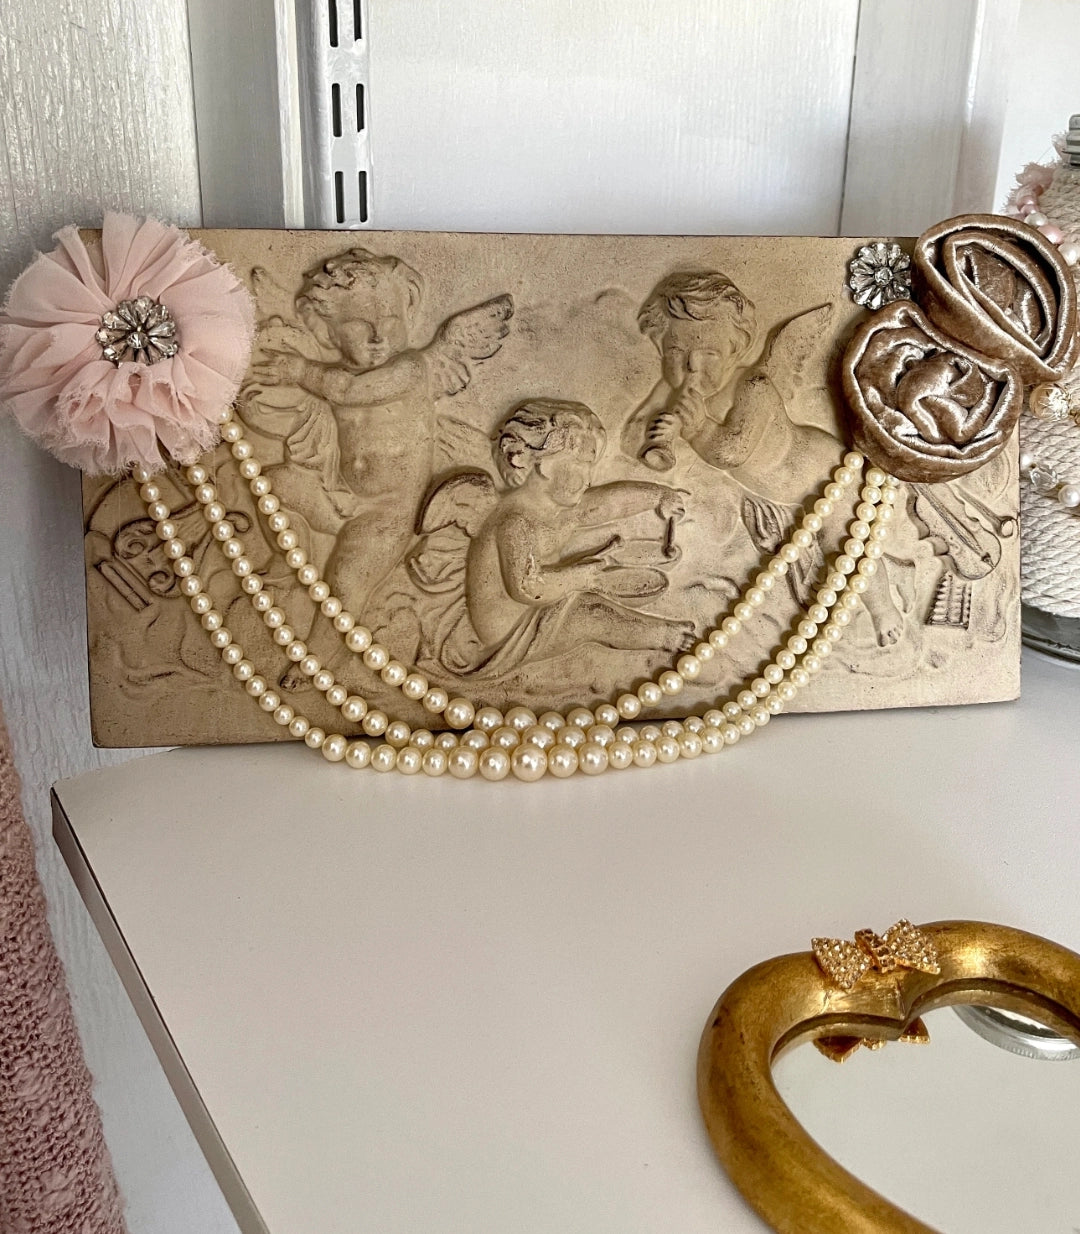 Ceramic Angel Art Piece w/ Vintage Pearls & Flowers